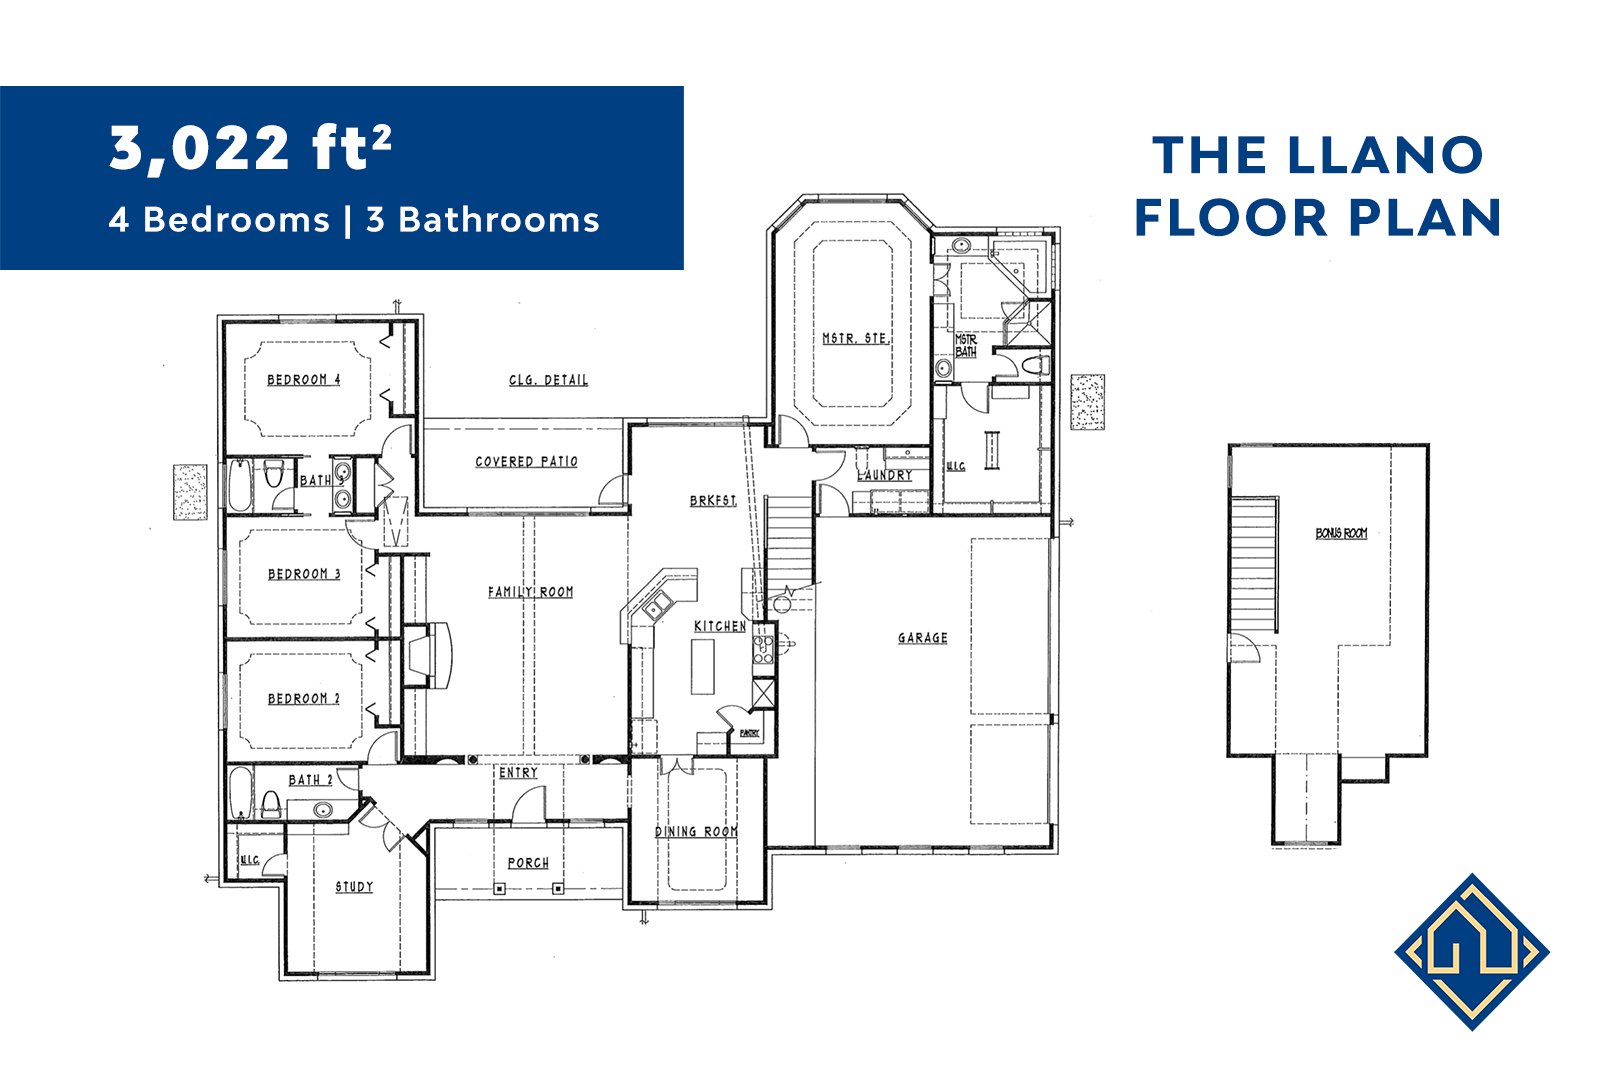 4 Bedroom 3 Bathroom Floor Plan with dimensions